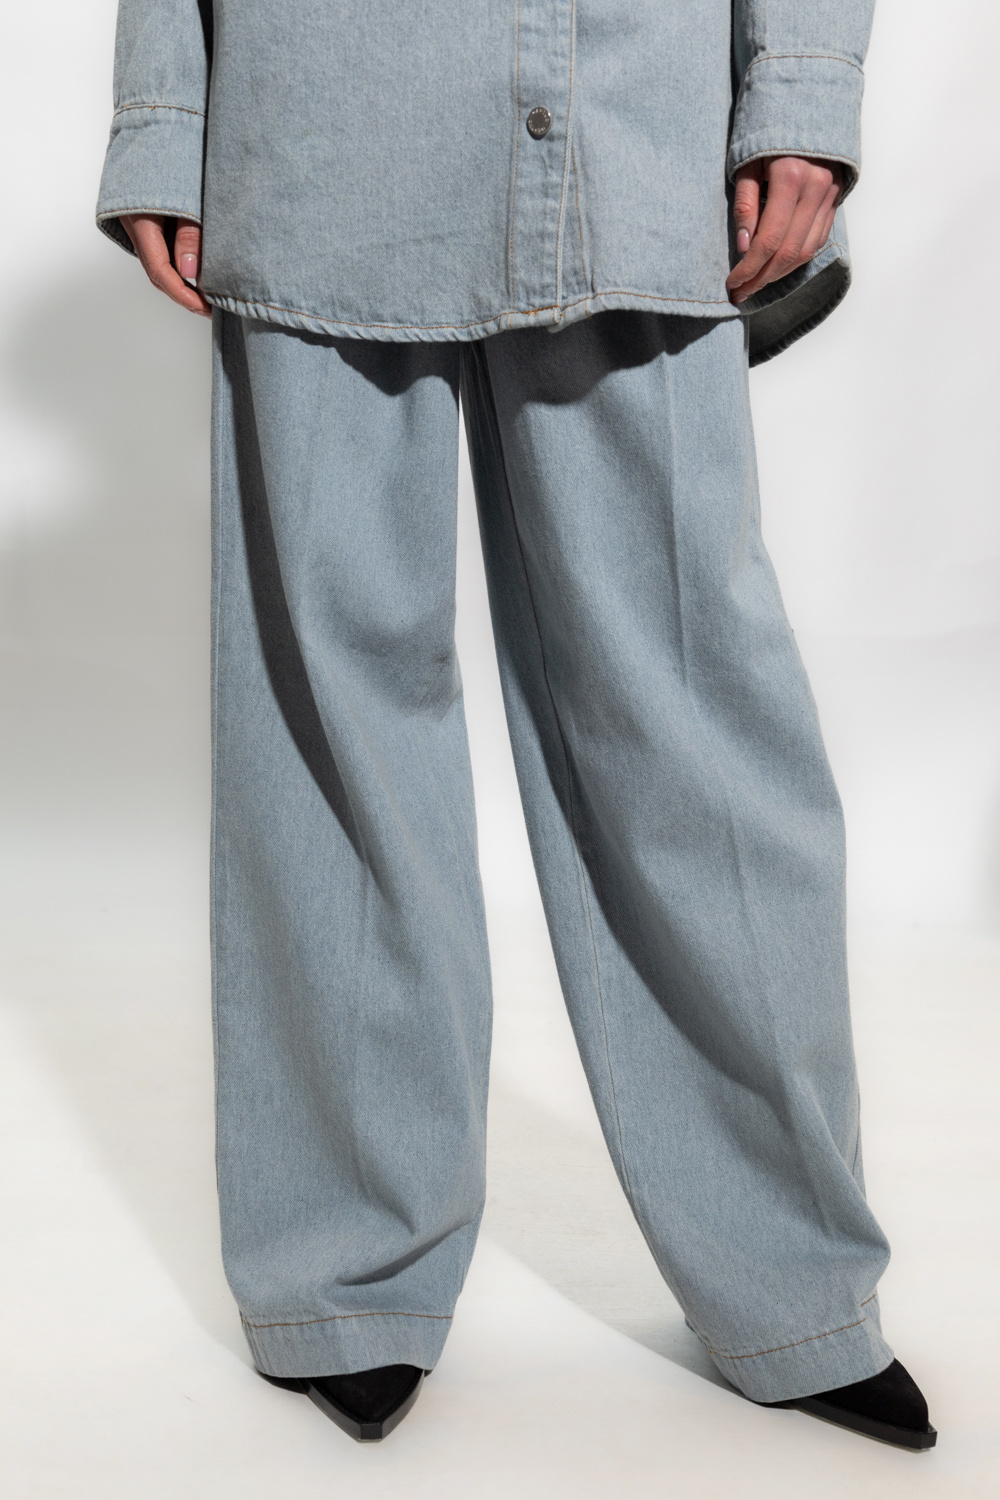 Gestuz ‘ZeldaGZ’ high-rise jeans